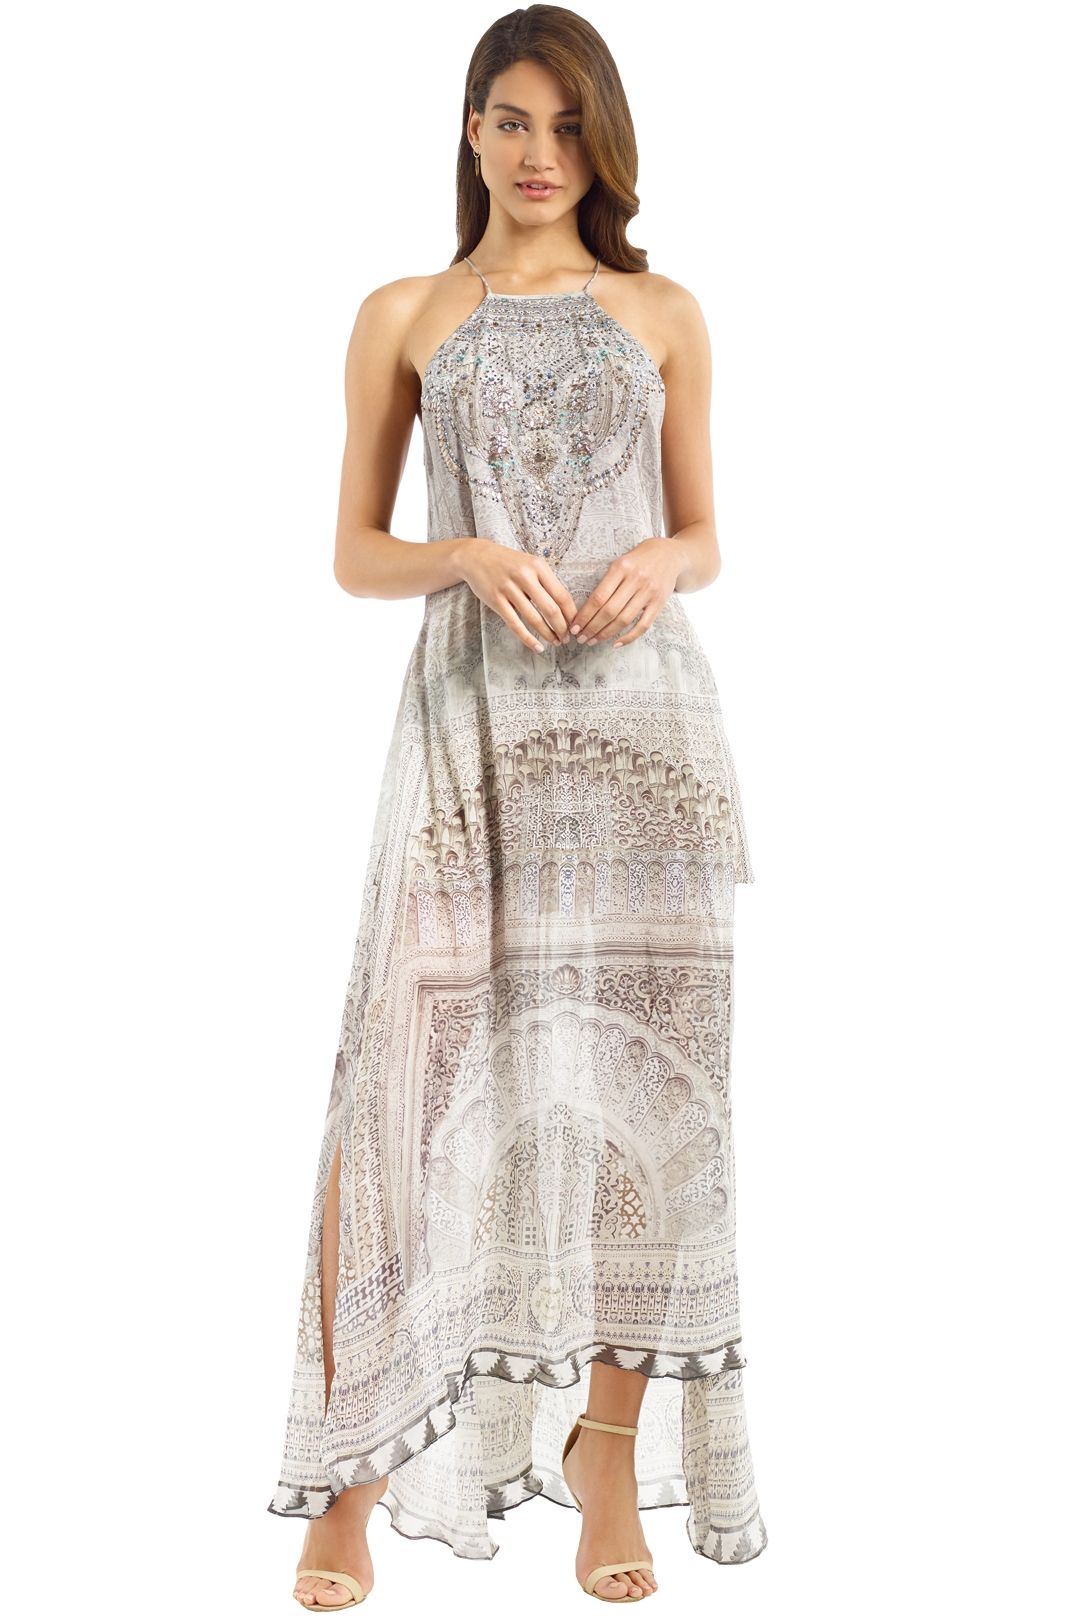 Camilla - Goddess Overlay Dress - Grey - Front